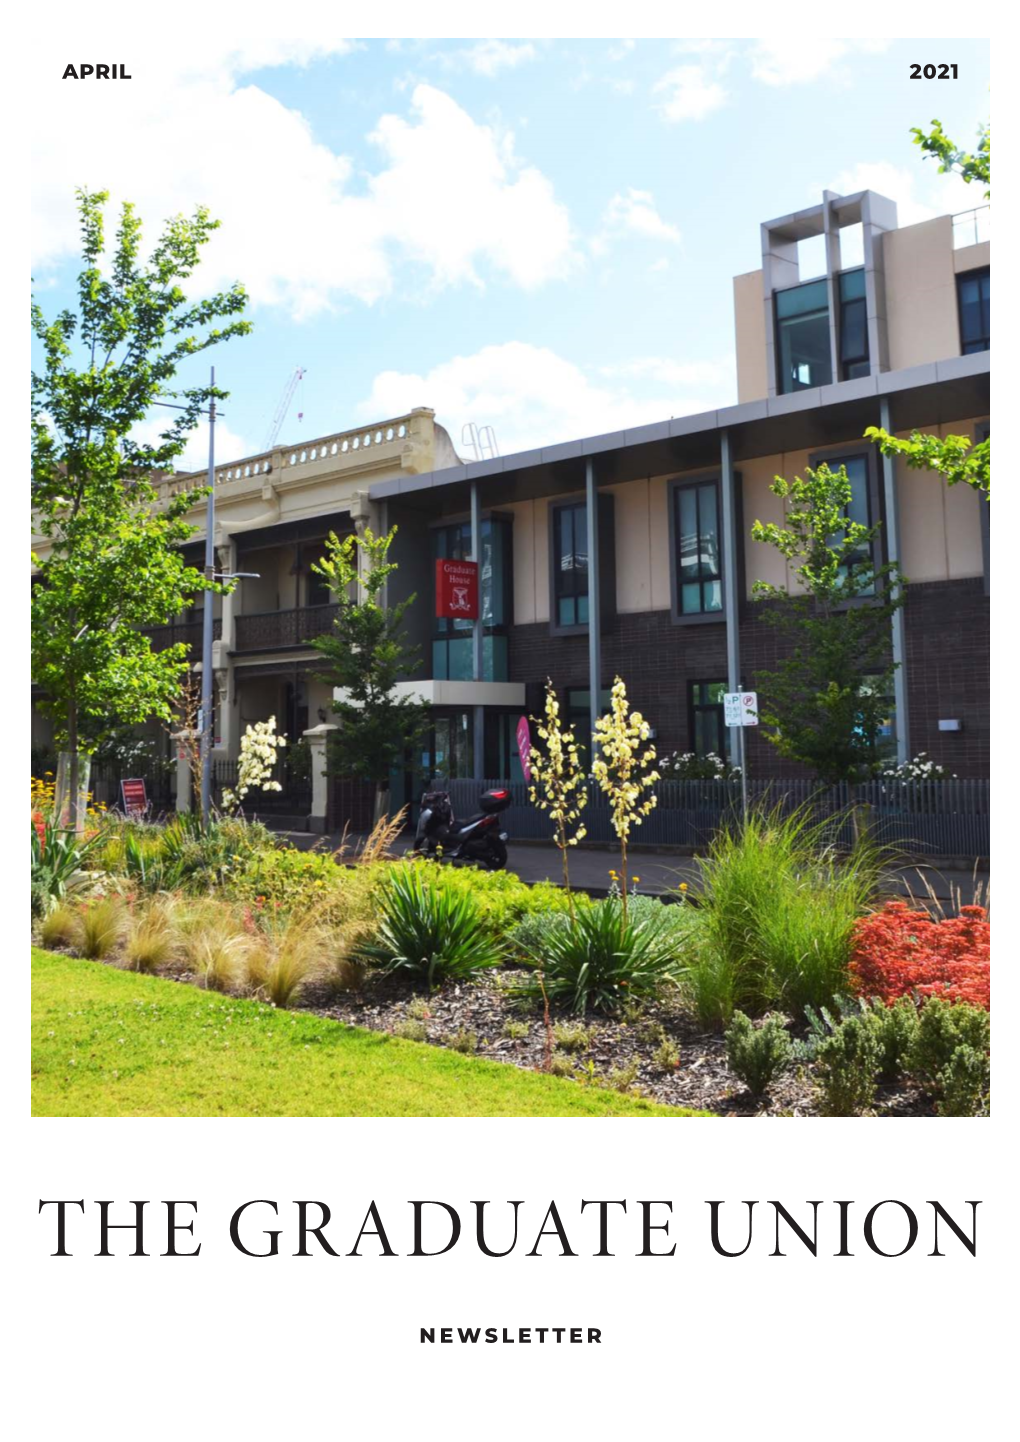 The Graduate Union